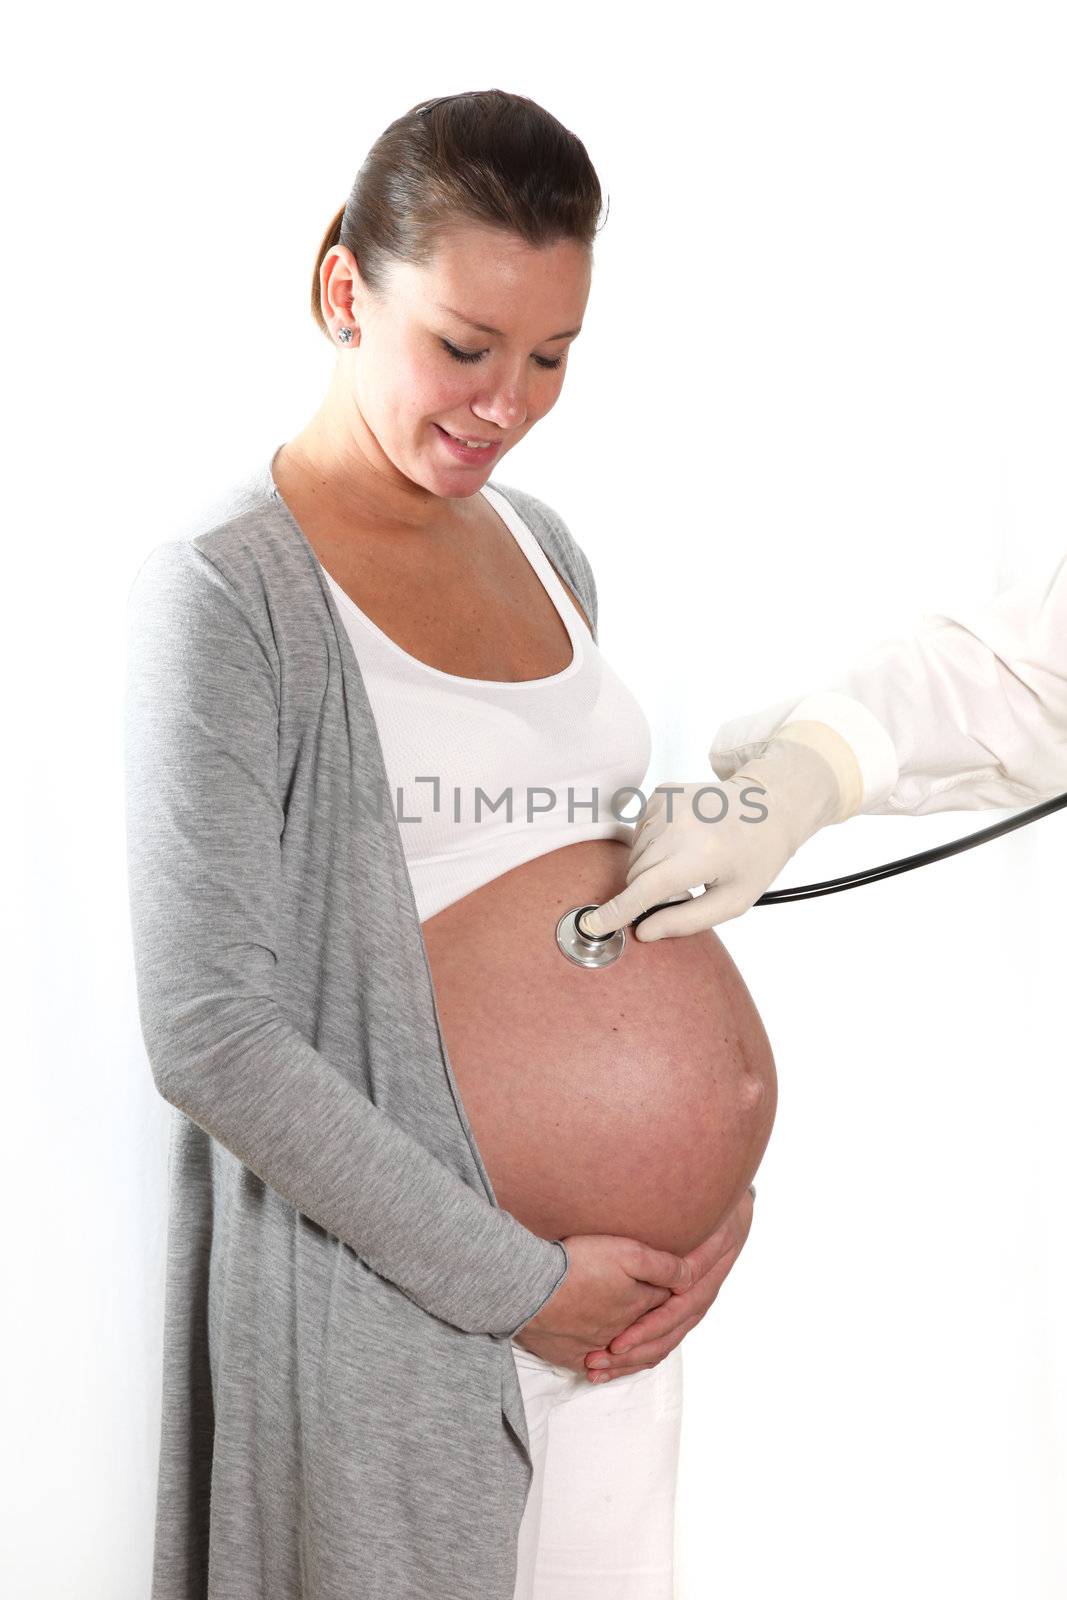 Doctors examine pregnant women by Farina6000